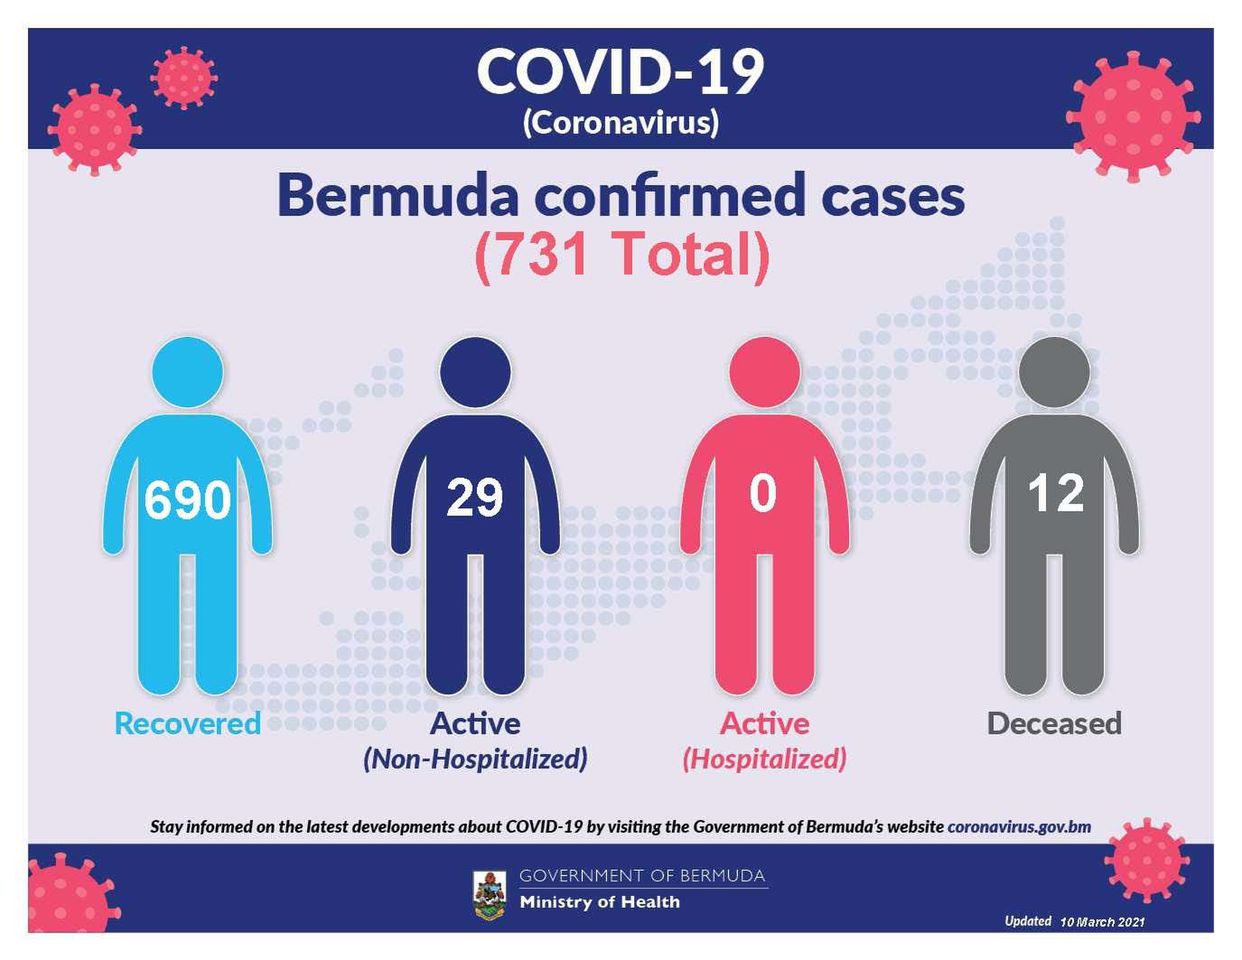 7 new COVID-19 cases reported in Bermuda, 10 March 2021